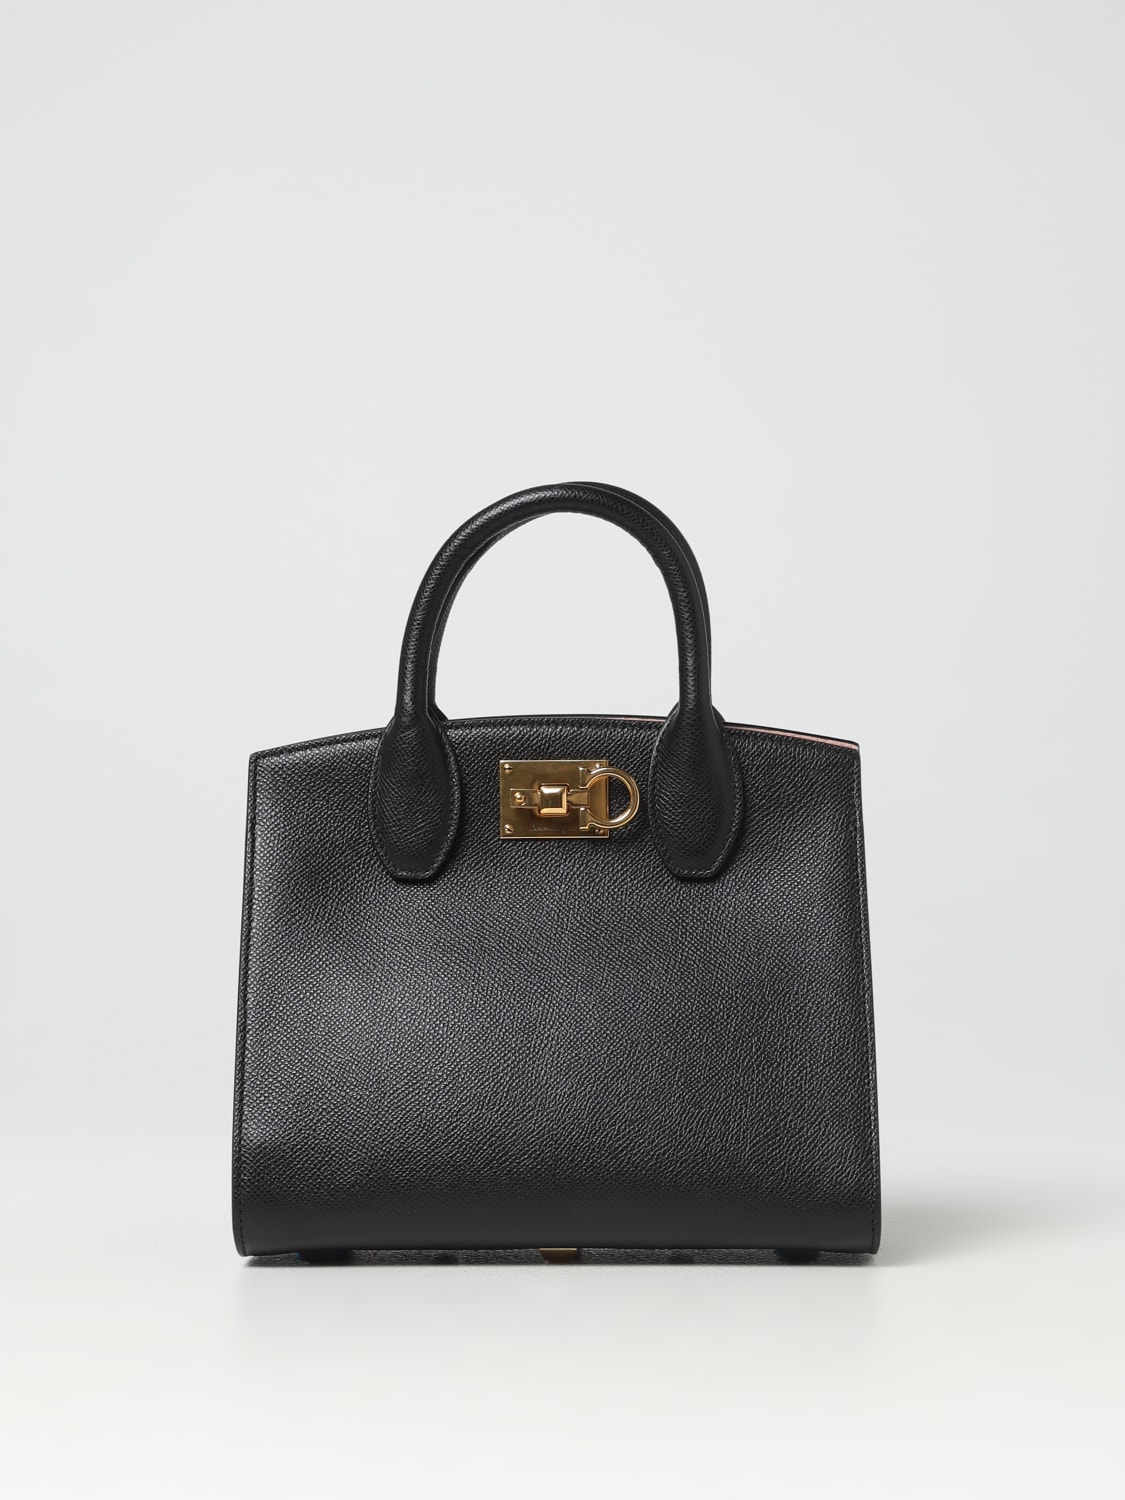 FERRAGAMO: Studio Box bag in leather with Gancini - Black | Ferragamo ...